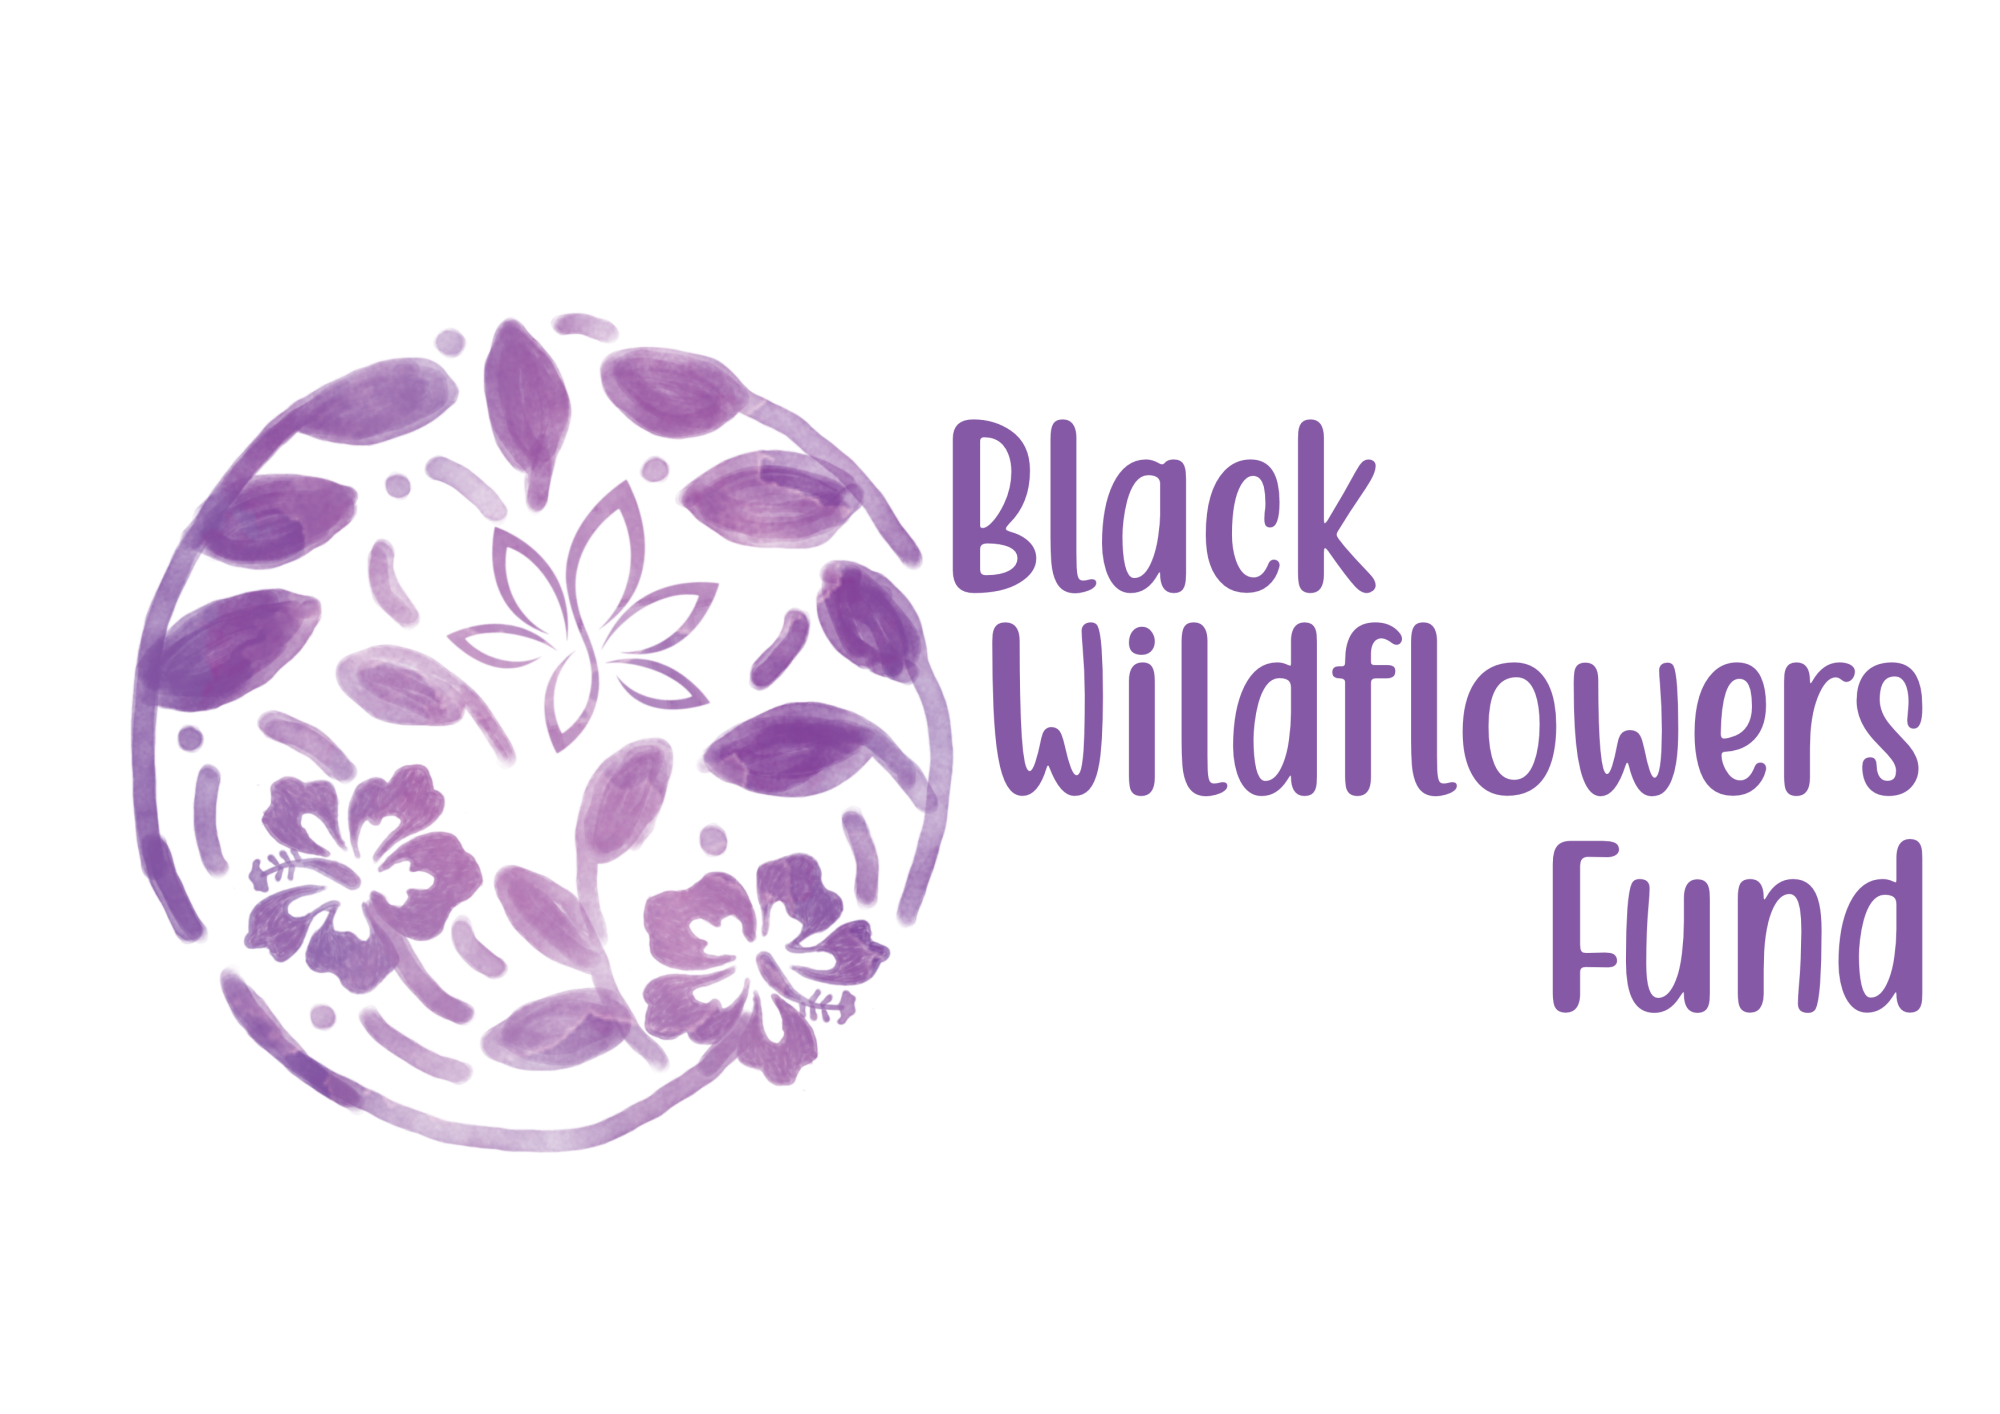 Black Wildflowers Fund logo